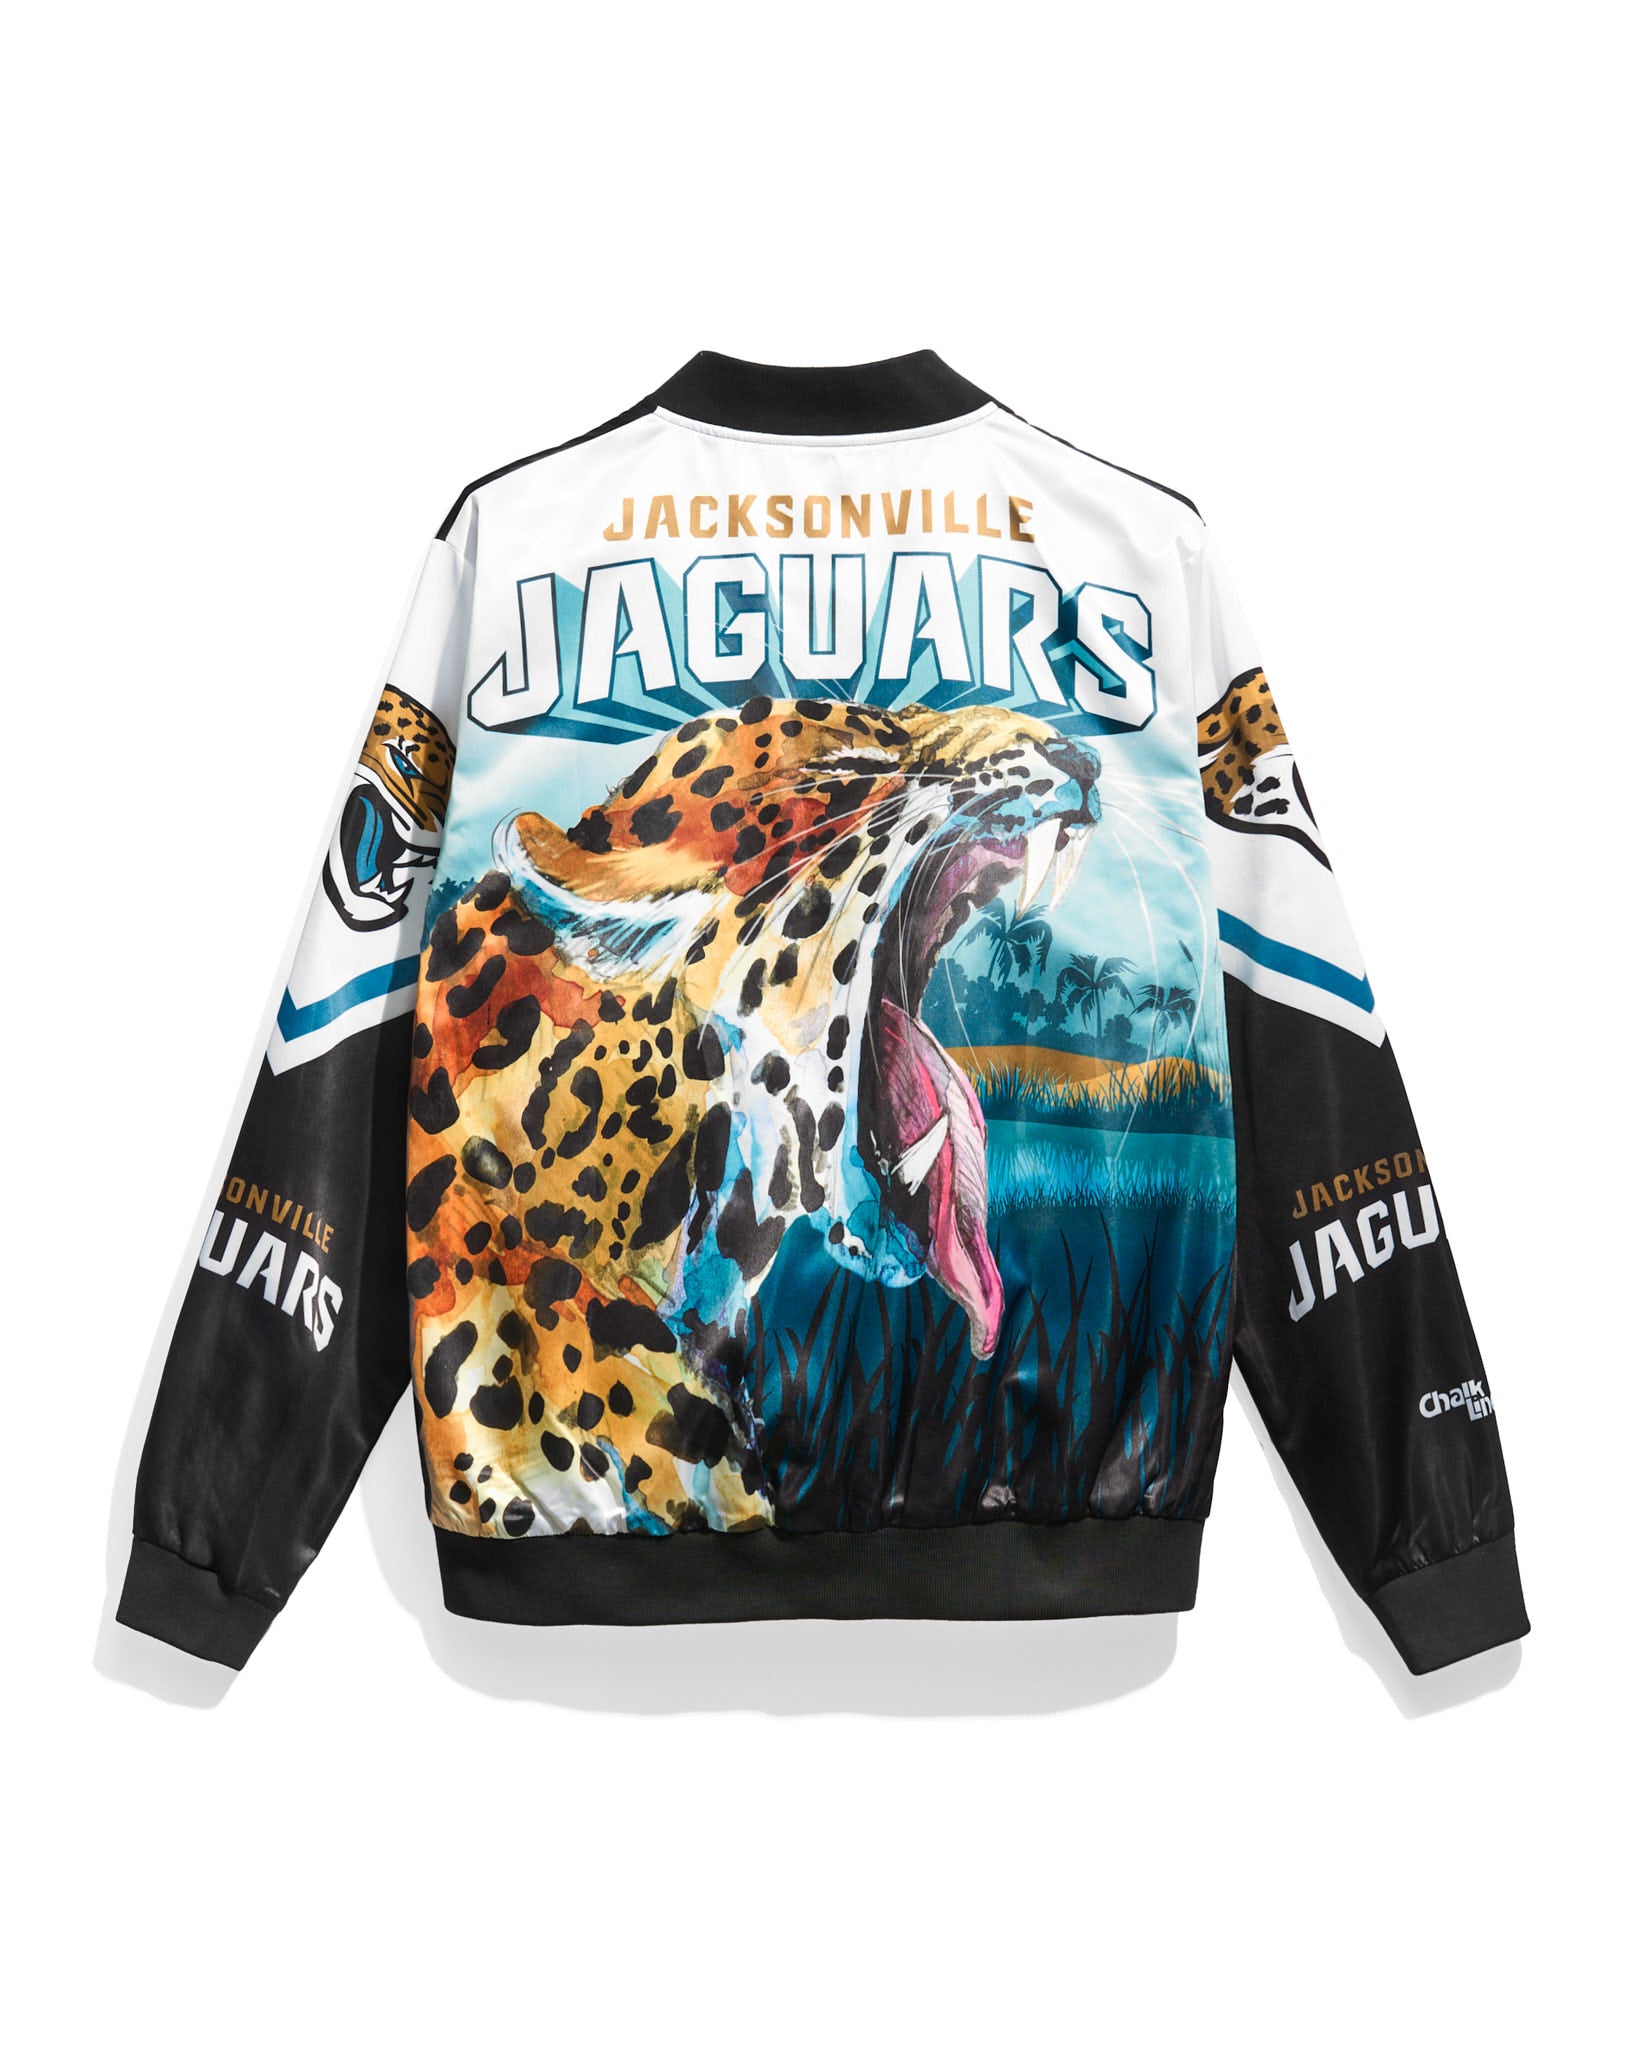 Jacksonville Jaguars Fanimation Satin Jacket